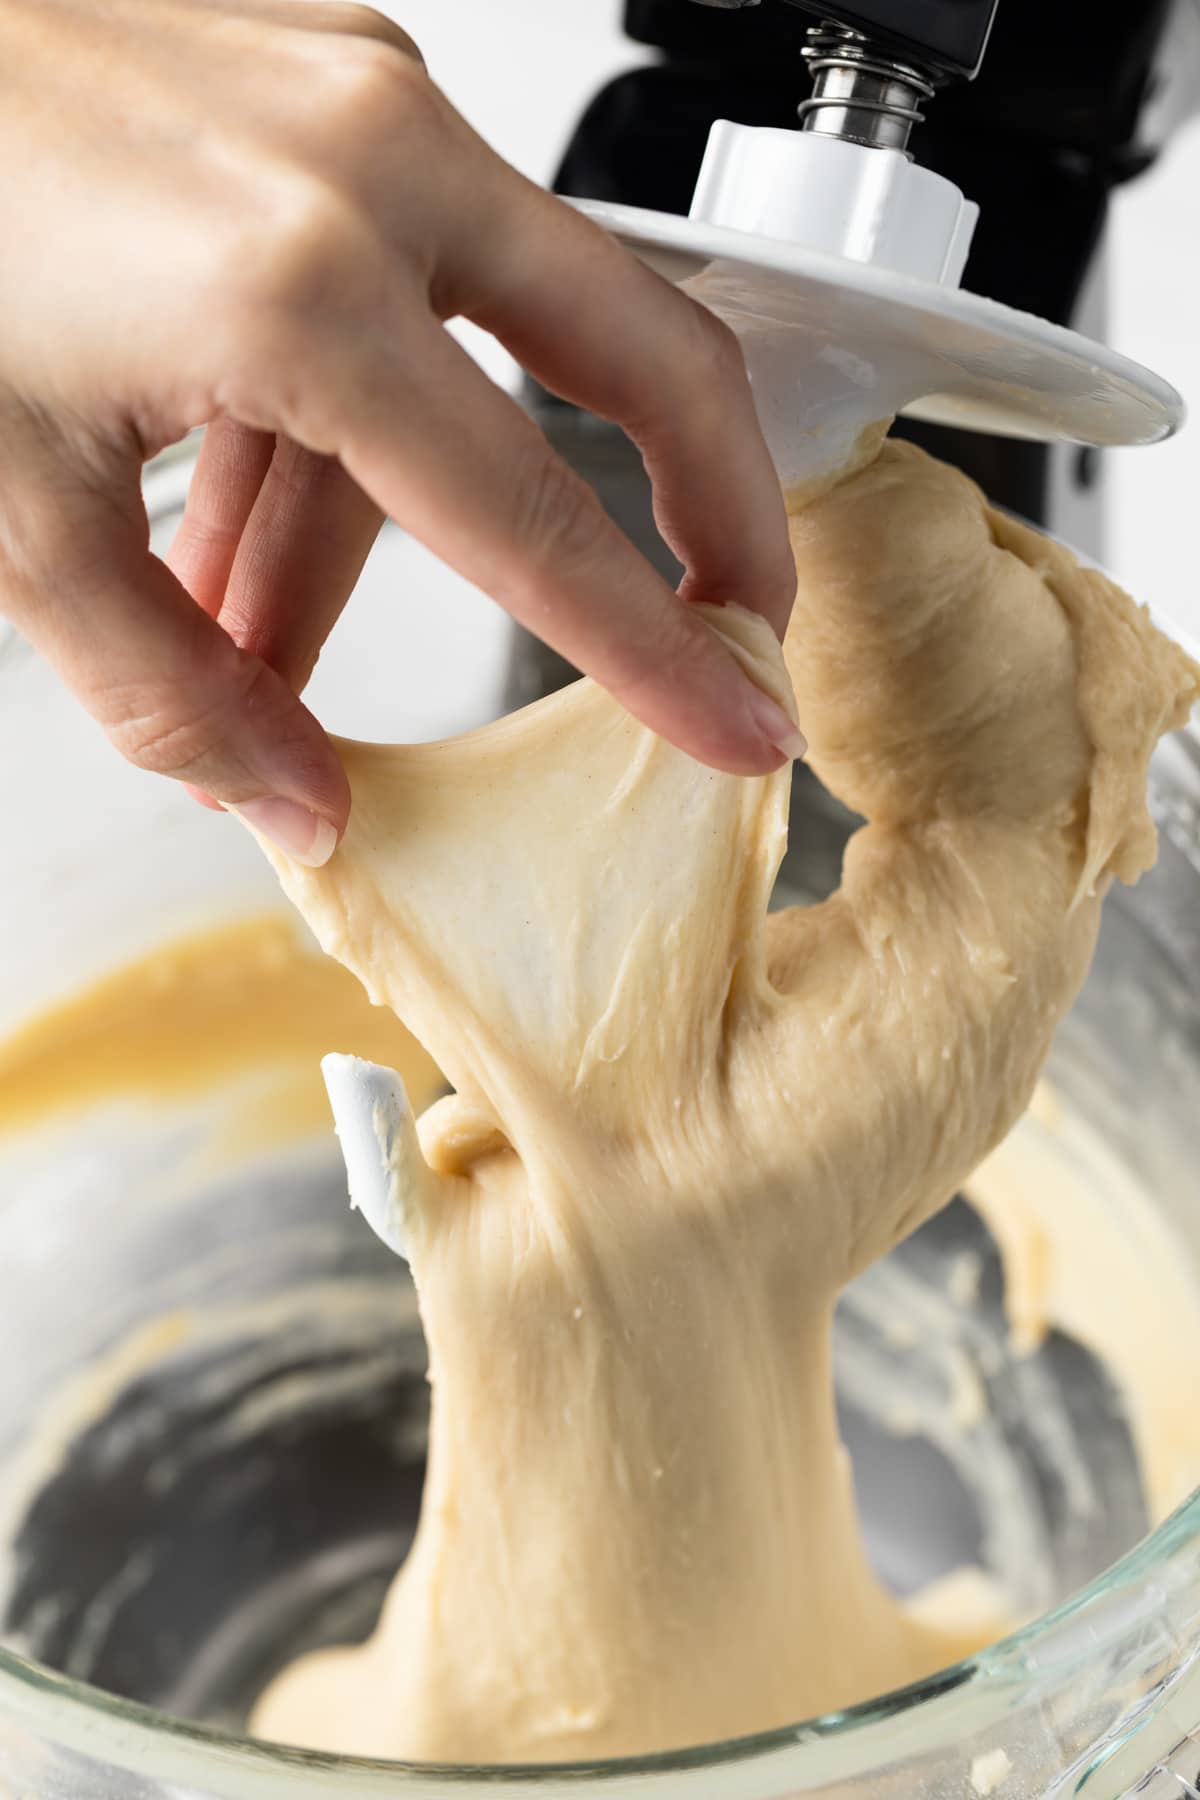 hand stretching dough to show window pane test